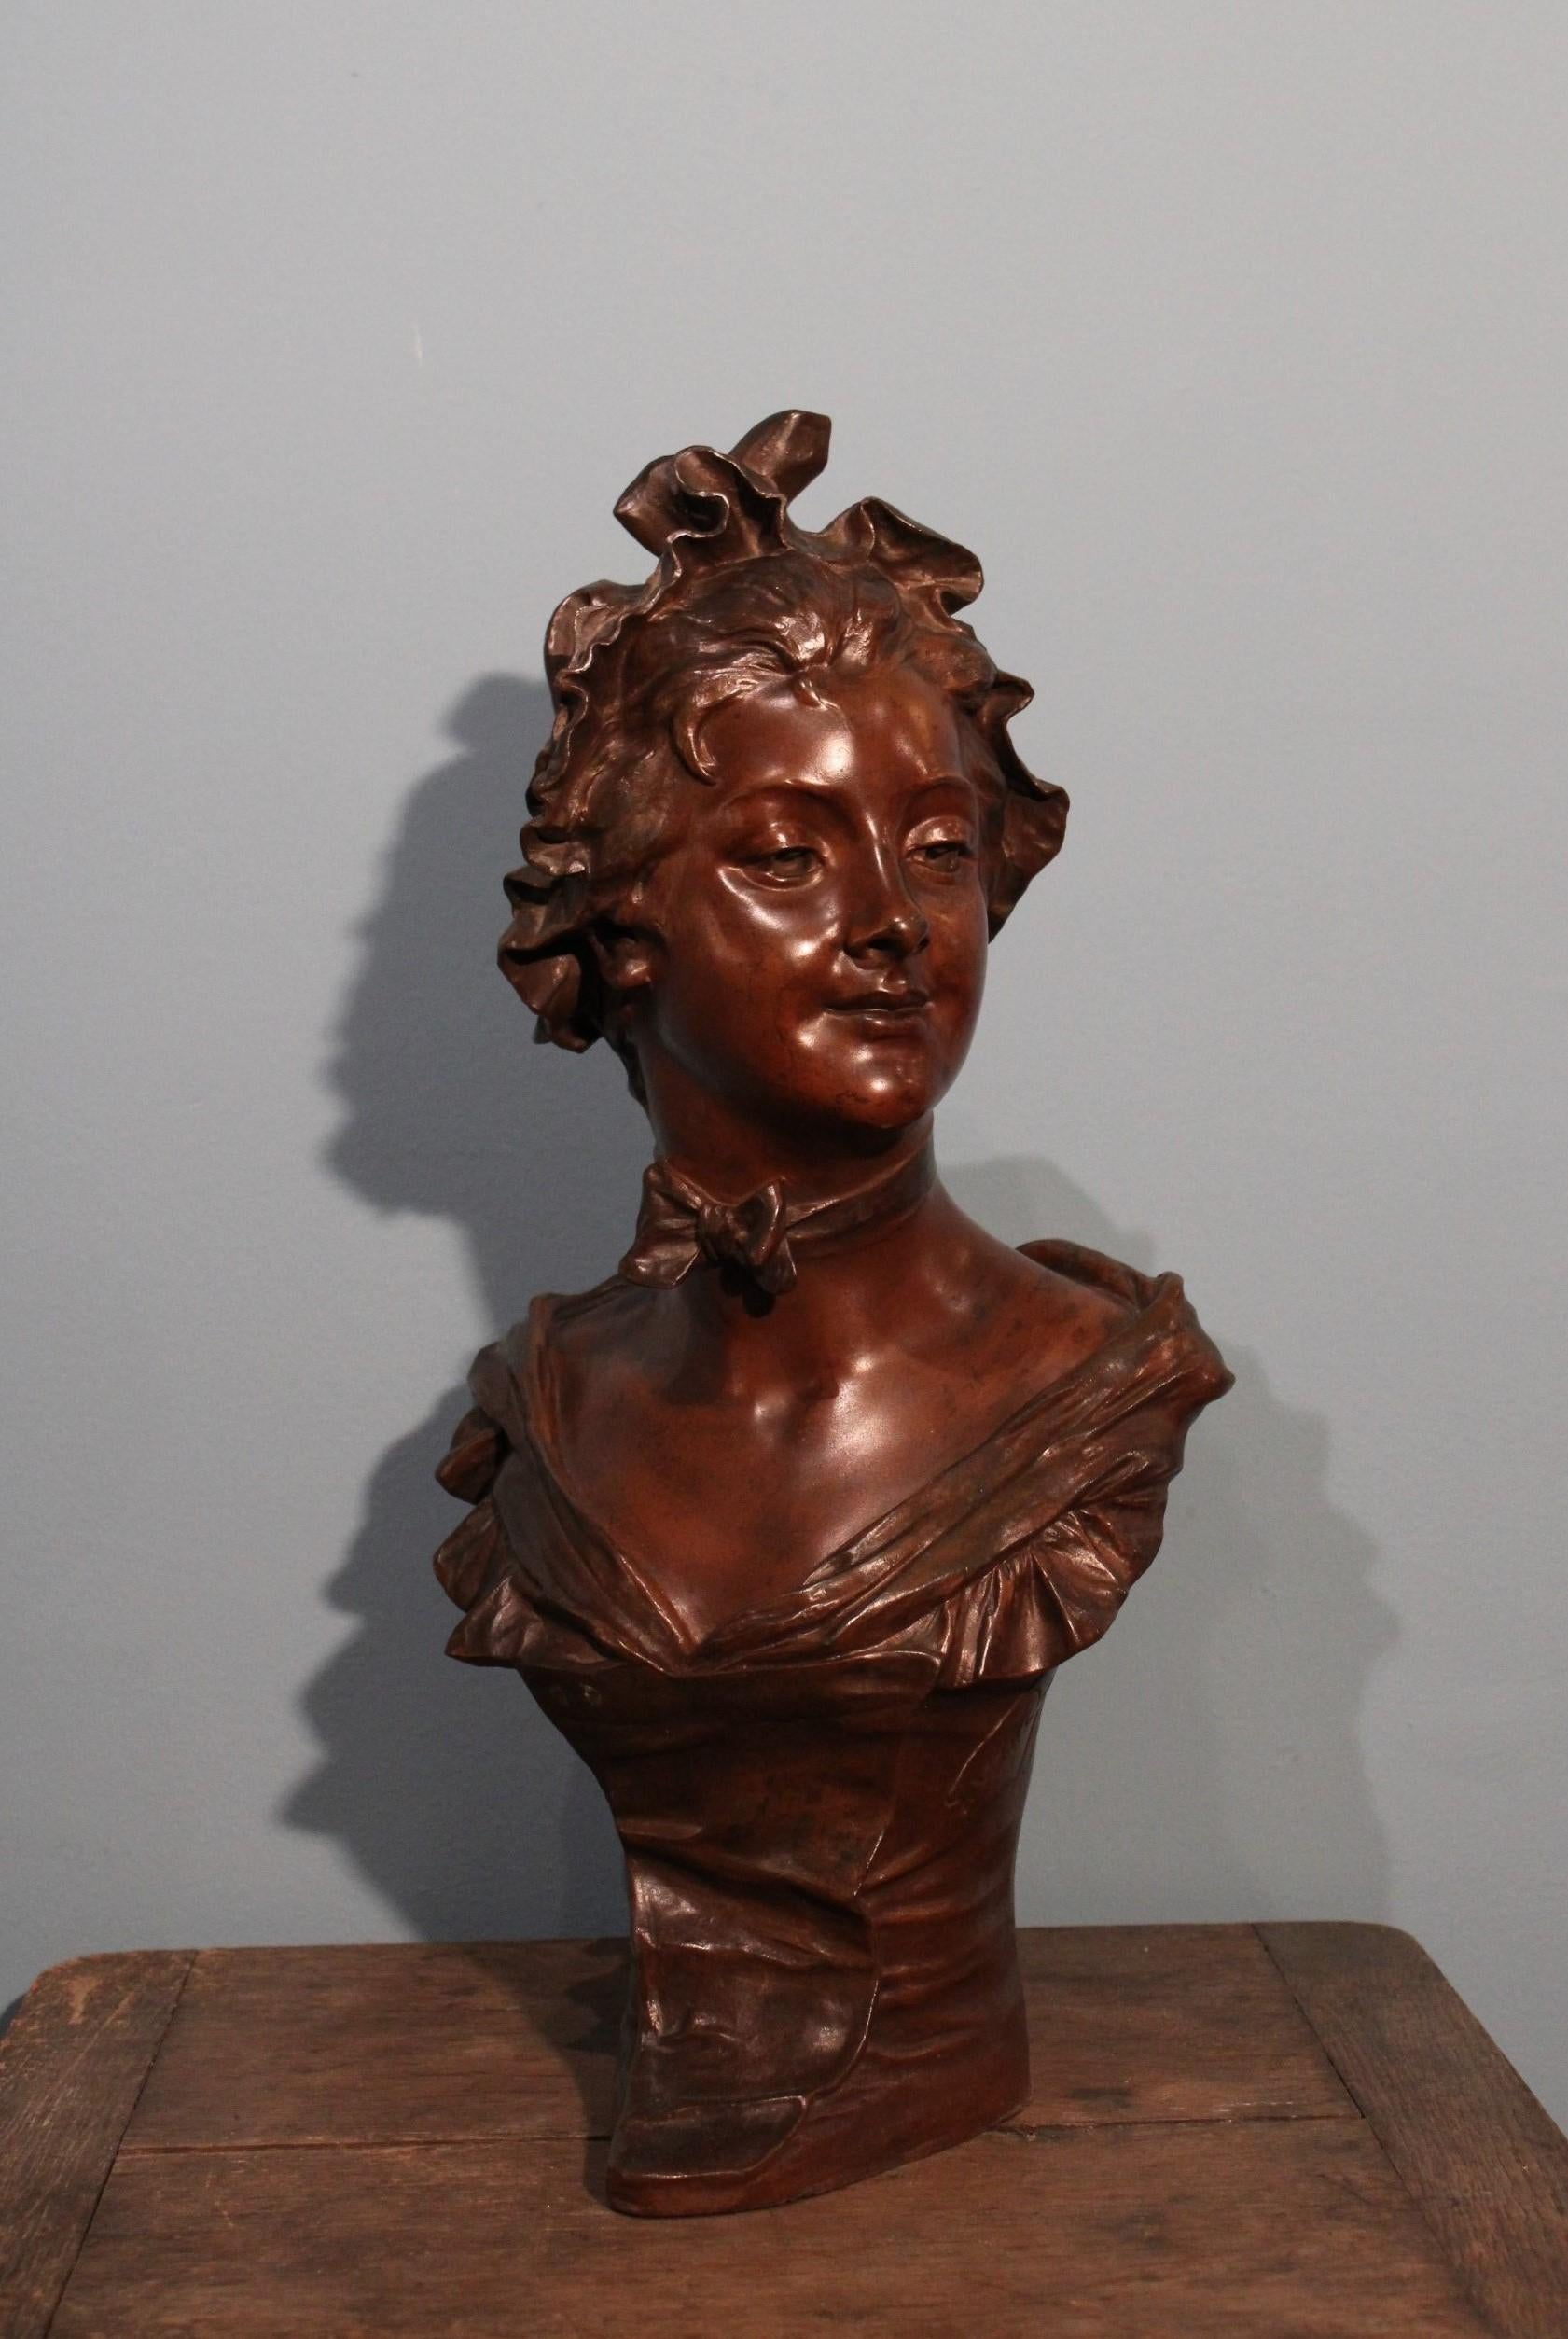 Bust of a woman, bronze sculpture by Georges Van Der Straeten (Belgium sculptor, 1856-1928).
